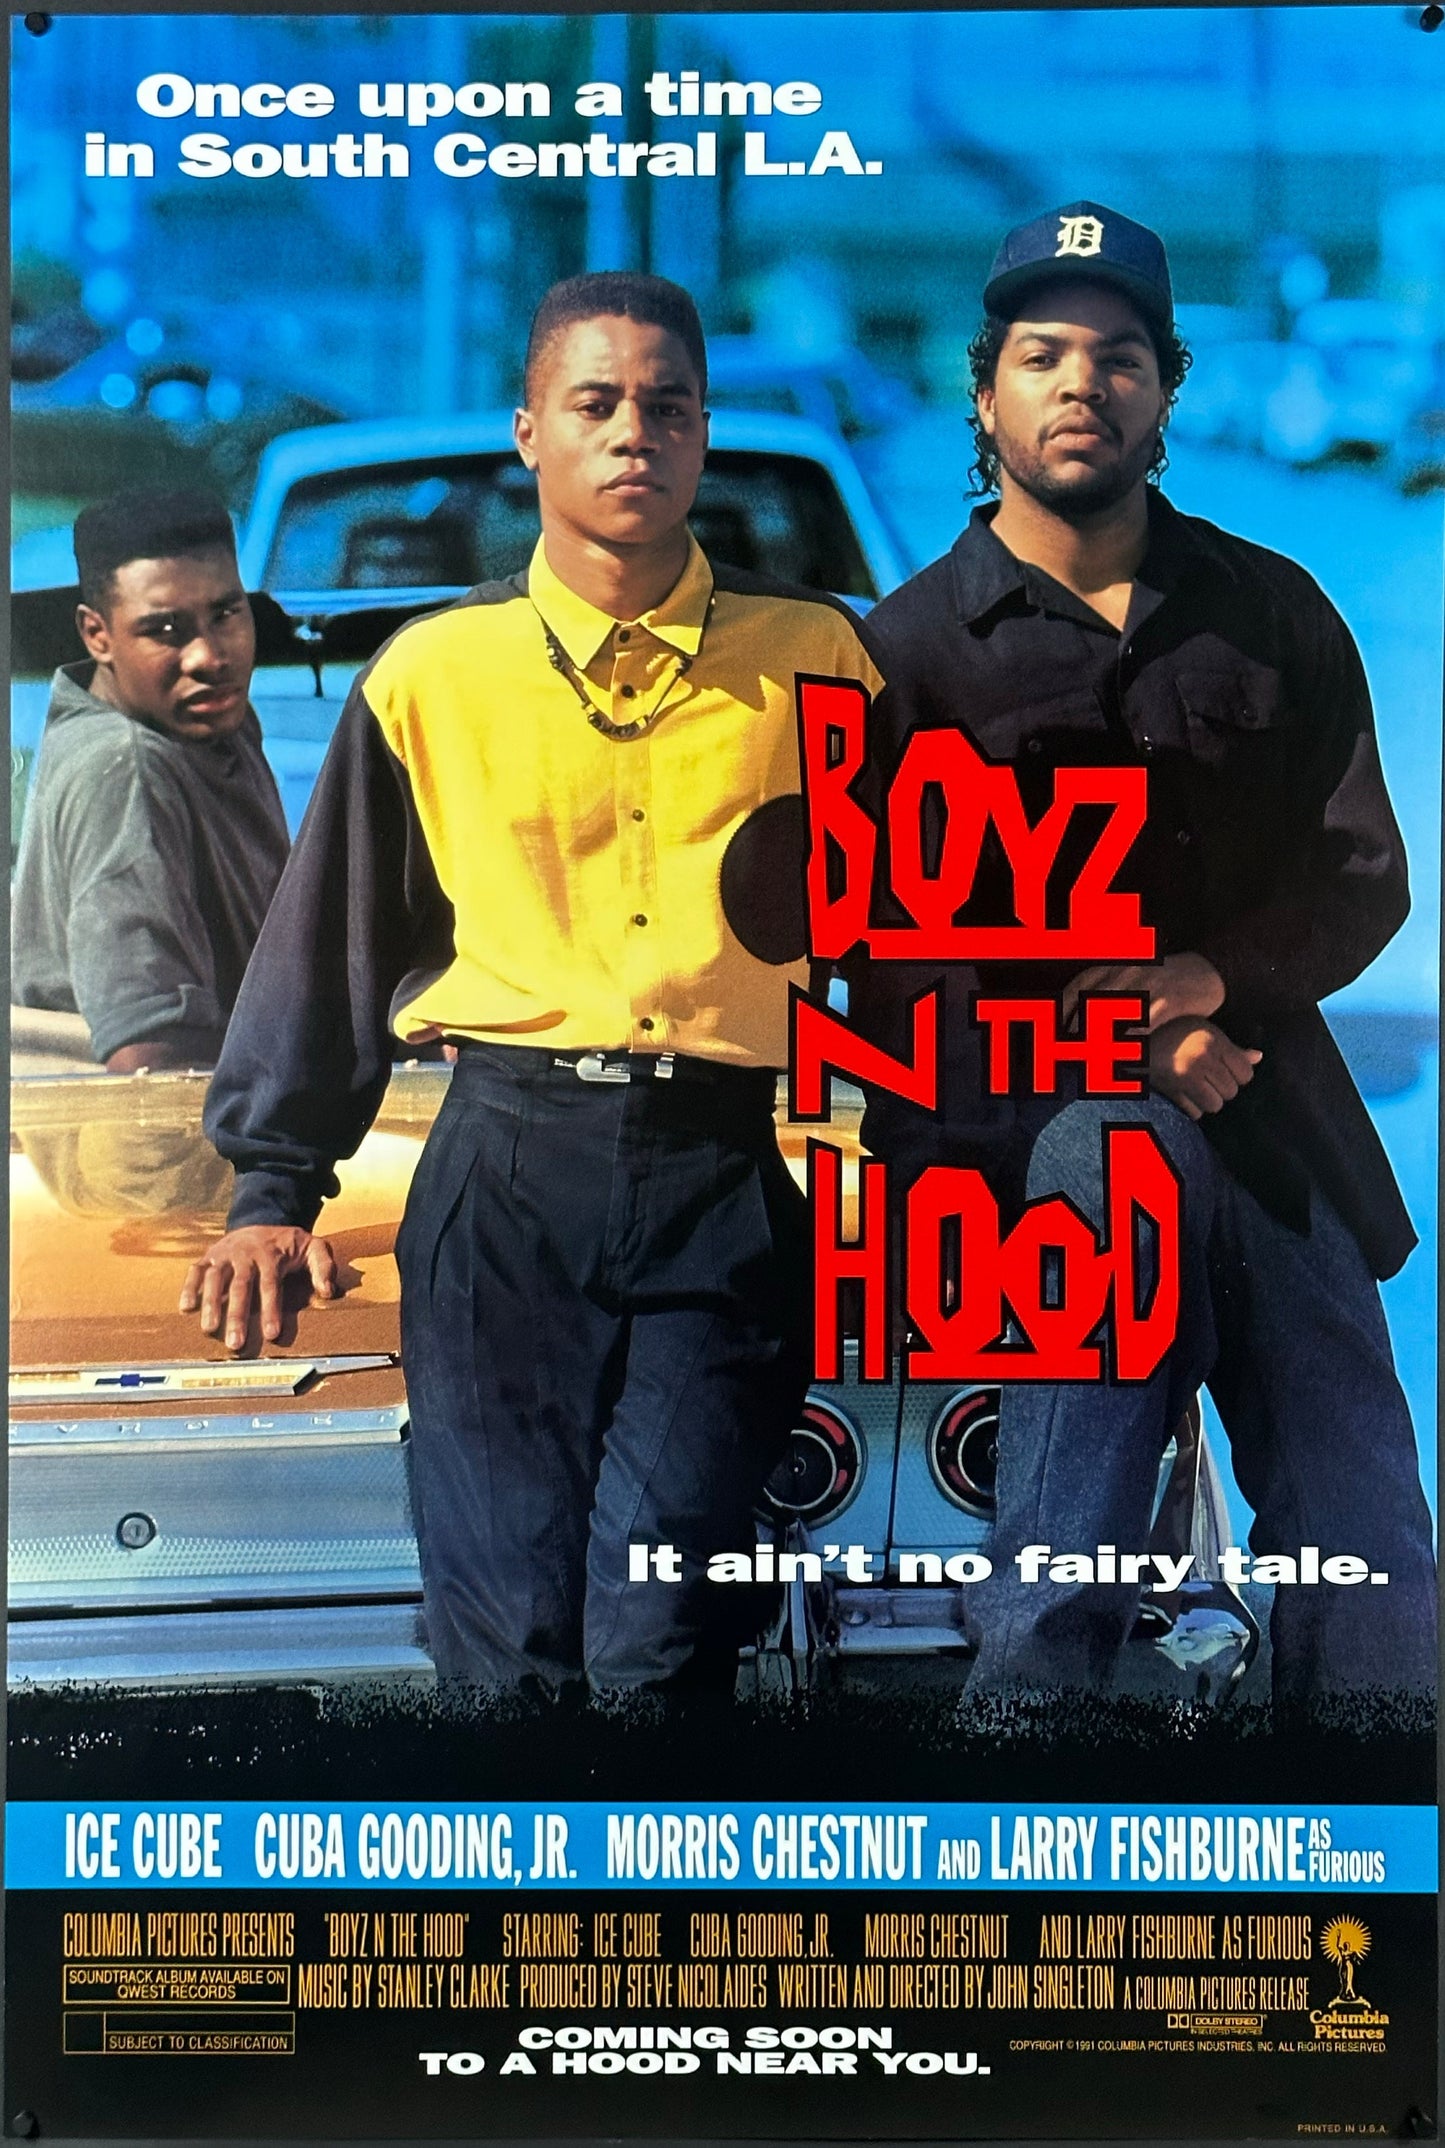 Boyz n The Hood US One Sheet (1991) - ORIGINAL RELEASE - posterpalace.com